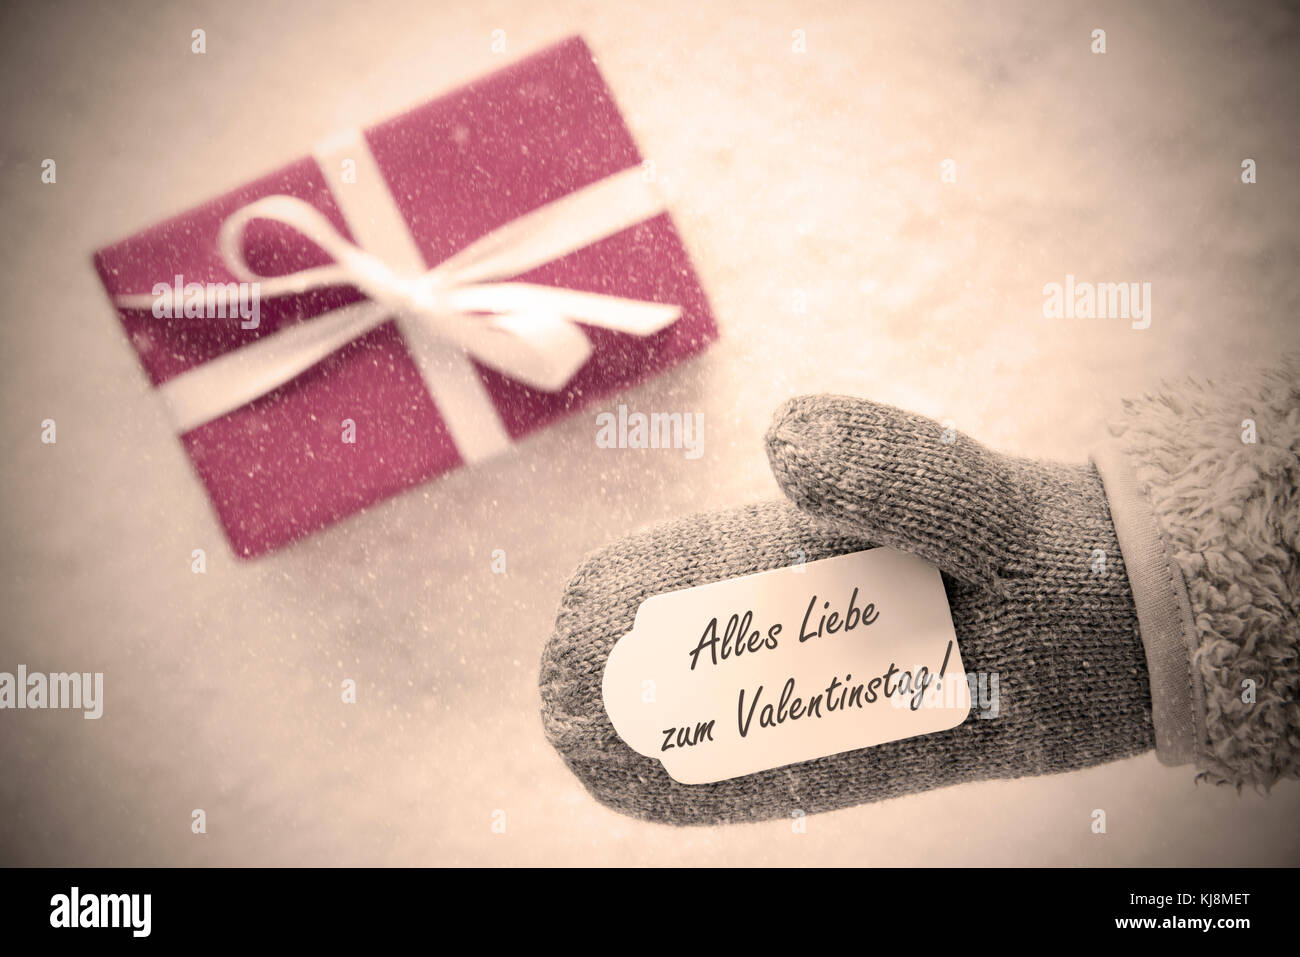 Pink Gift, Glove, Valentinstag Means Happy Valentines Day, Instagram Filter Stock Photo